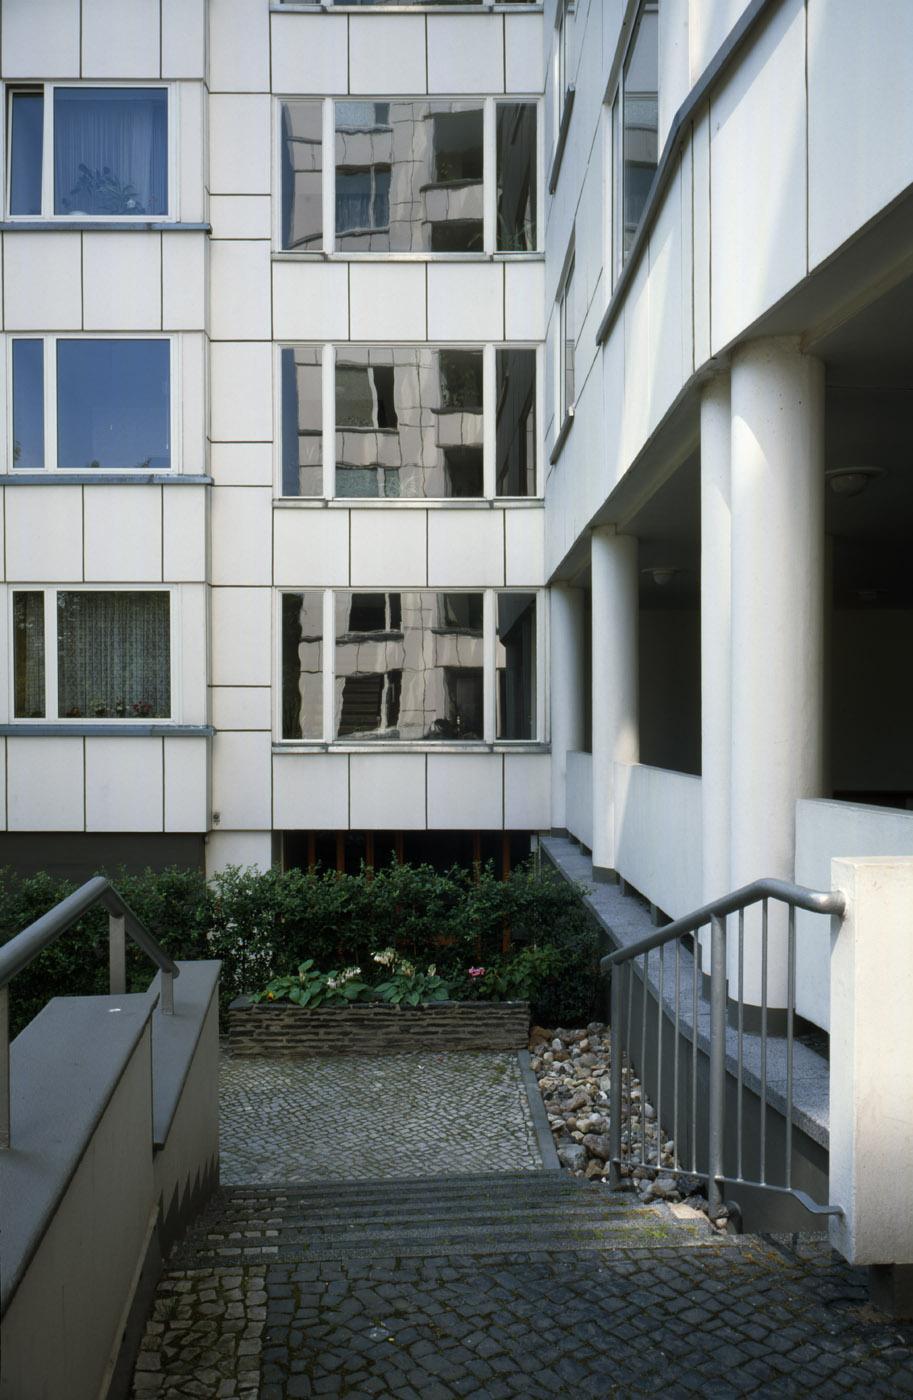 Hansaviertel Apartment building